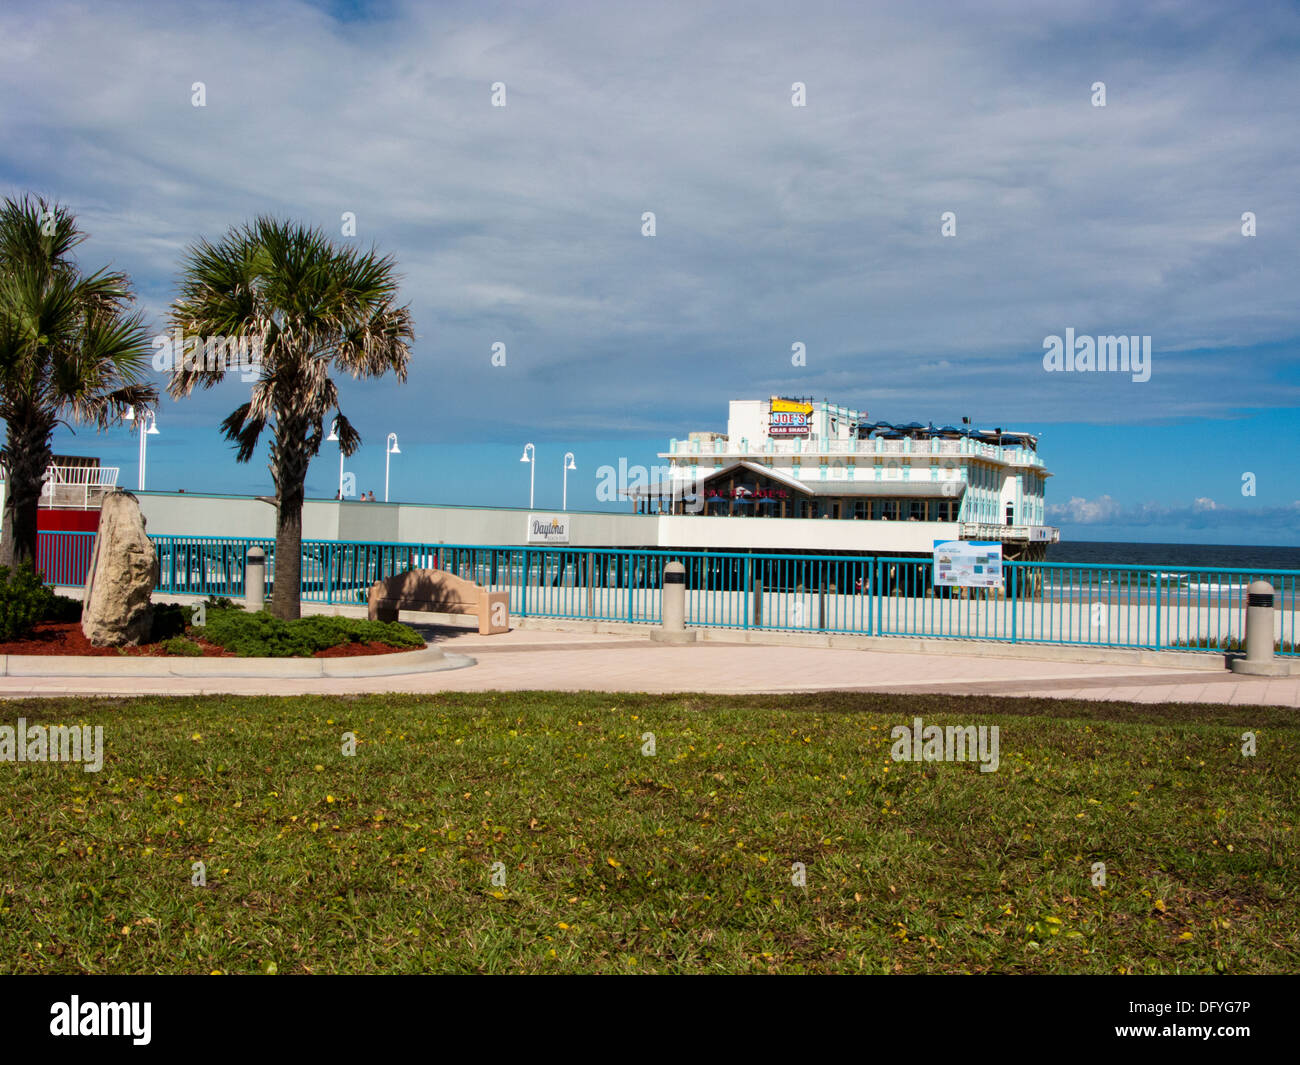 Daytona beach pier Stock Photo